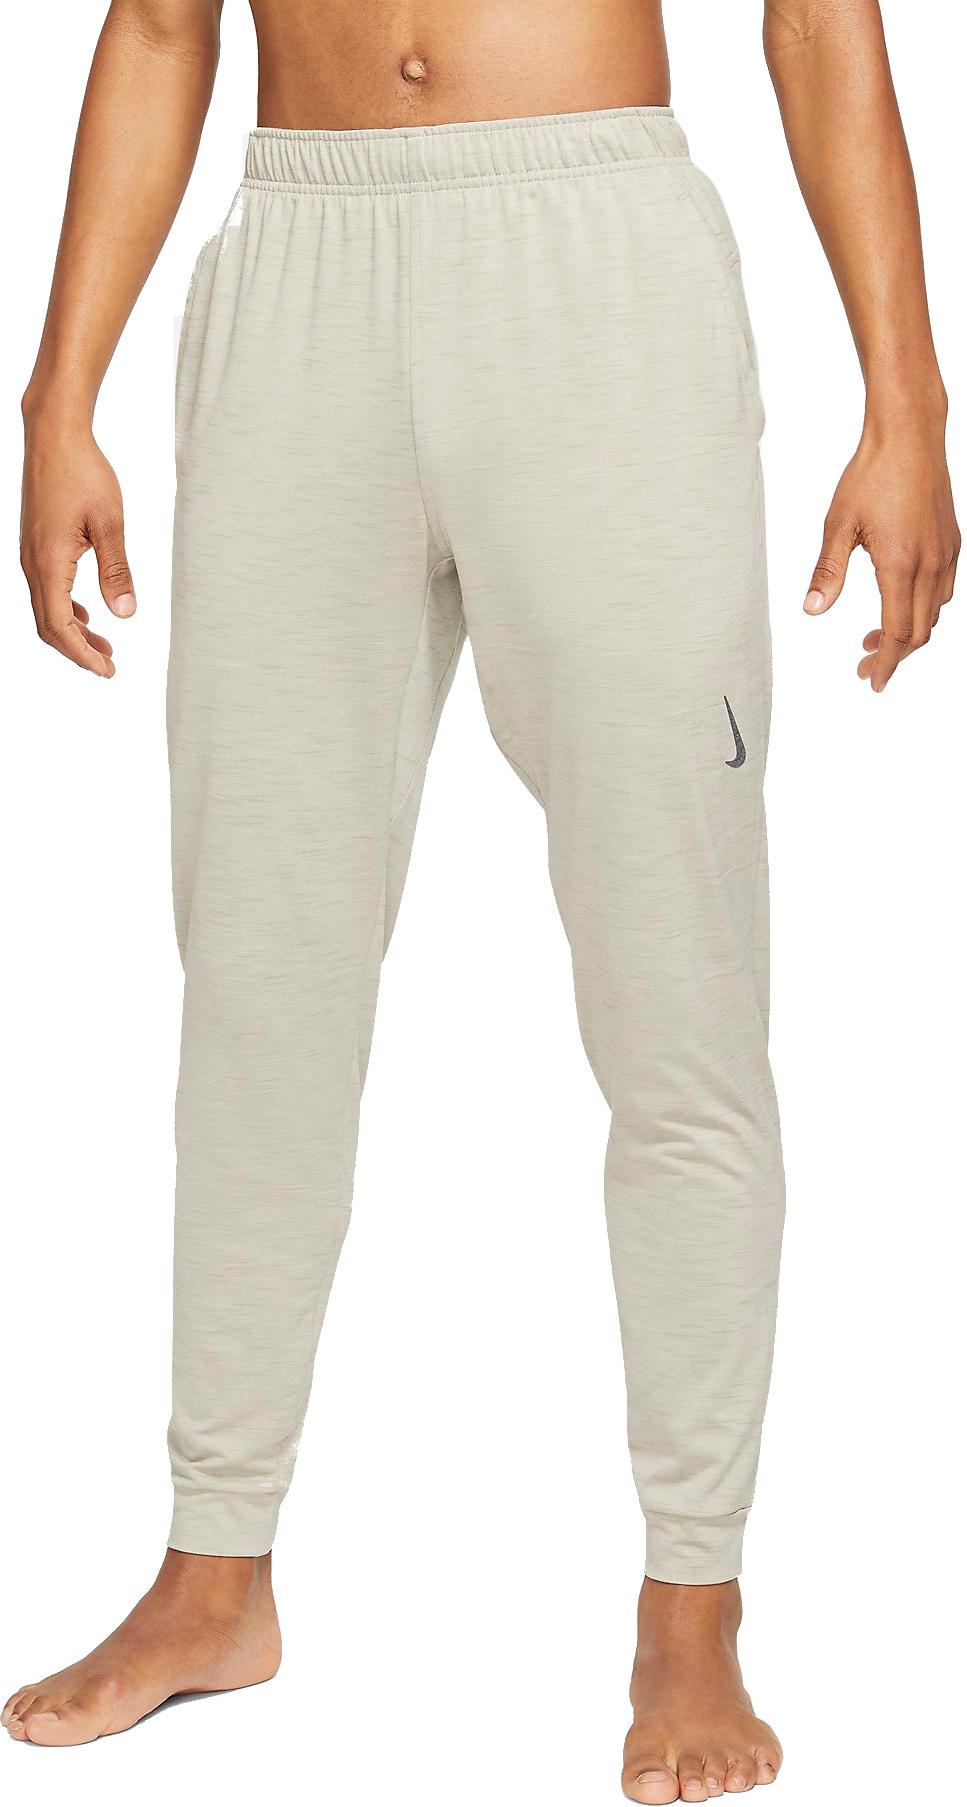 Pánské kalhoty Nike Yoga Dri-FIT